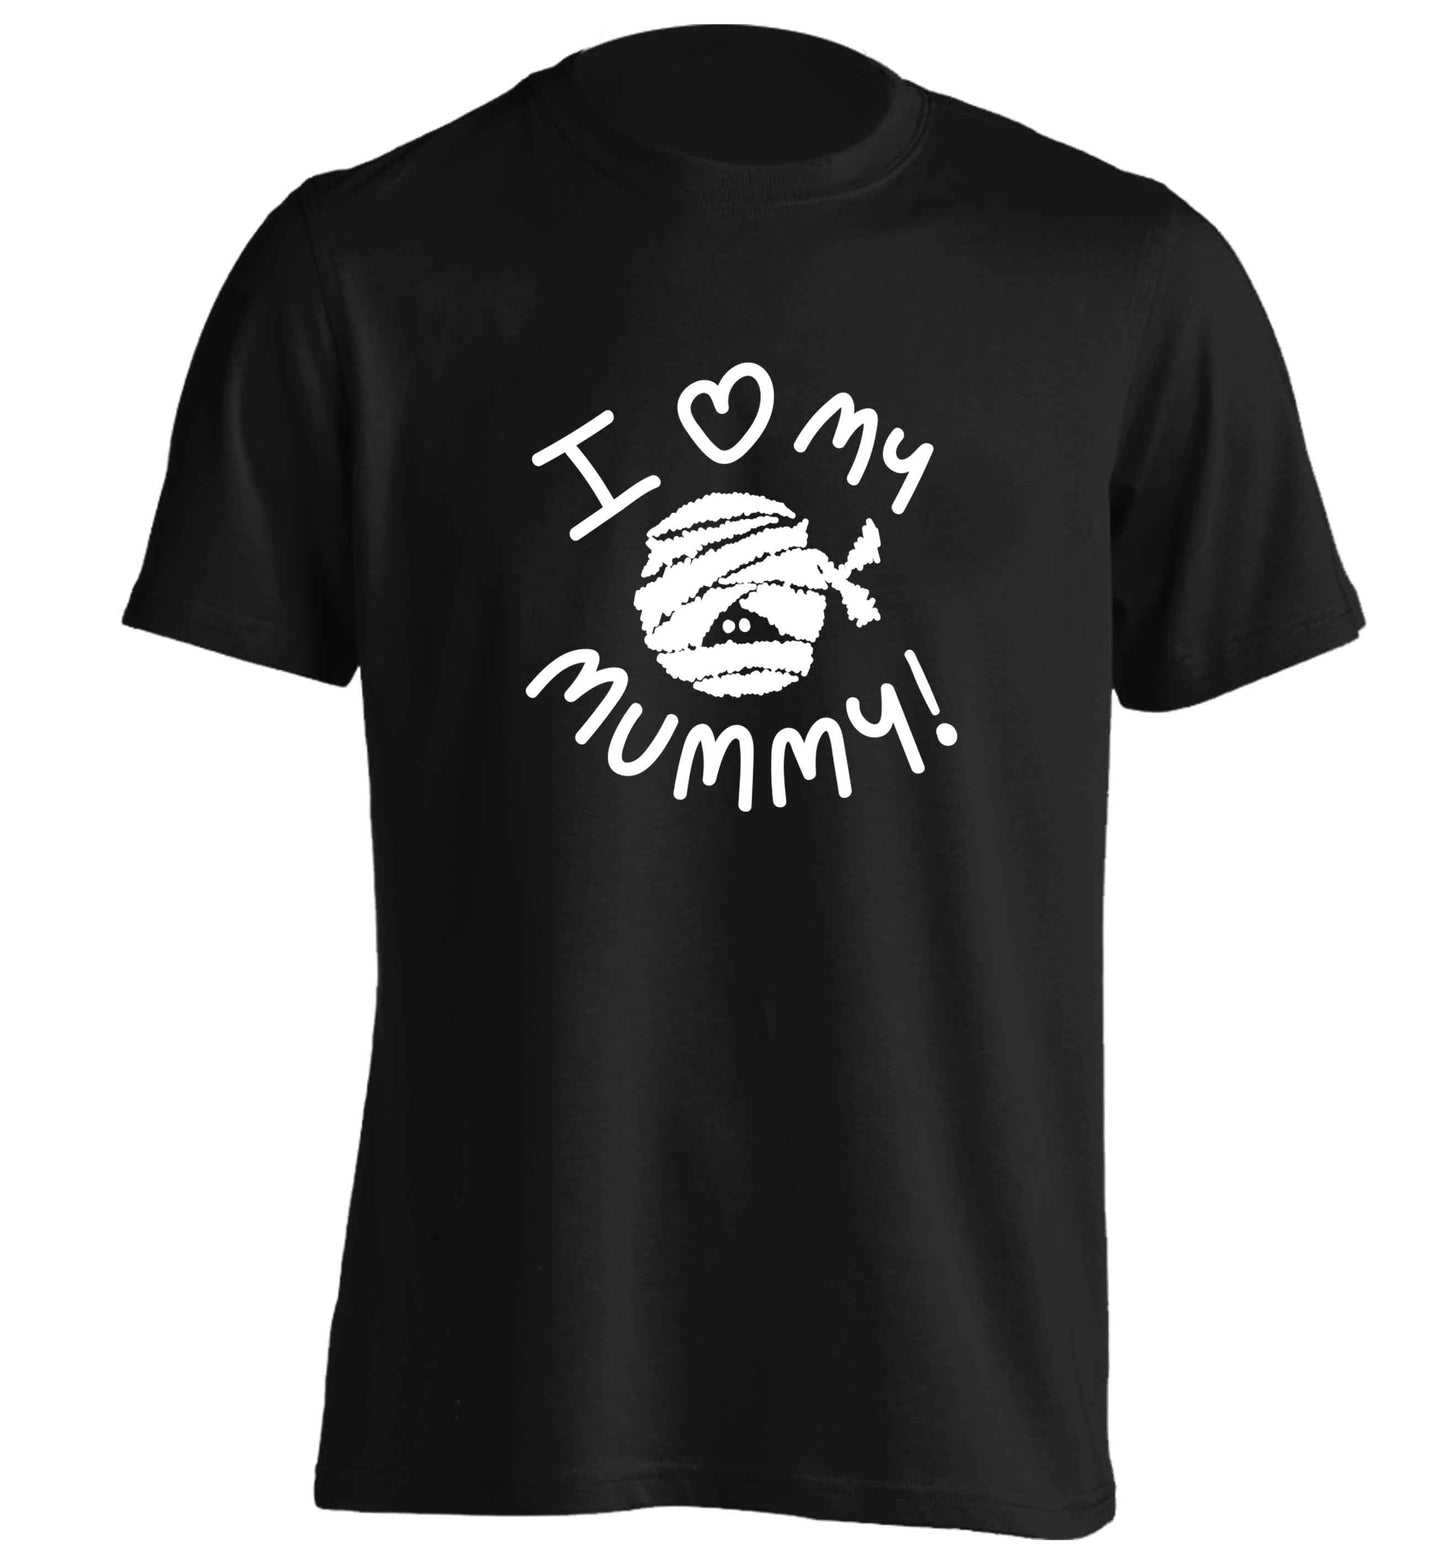 I love my mummy halloween pun adults unisex black Tshirt 2XL